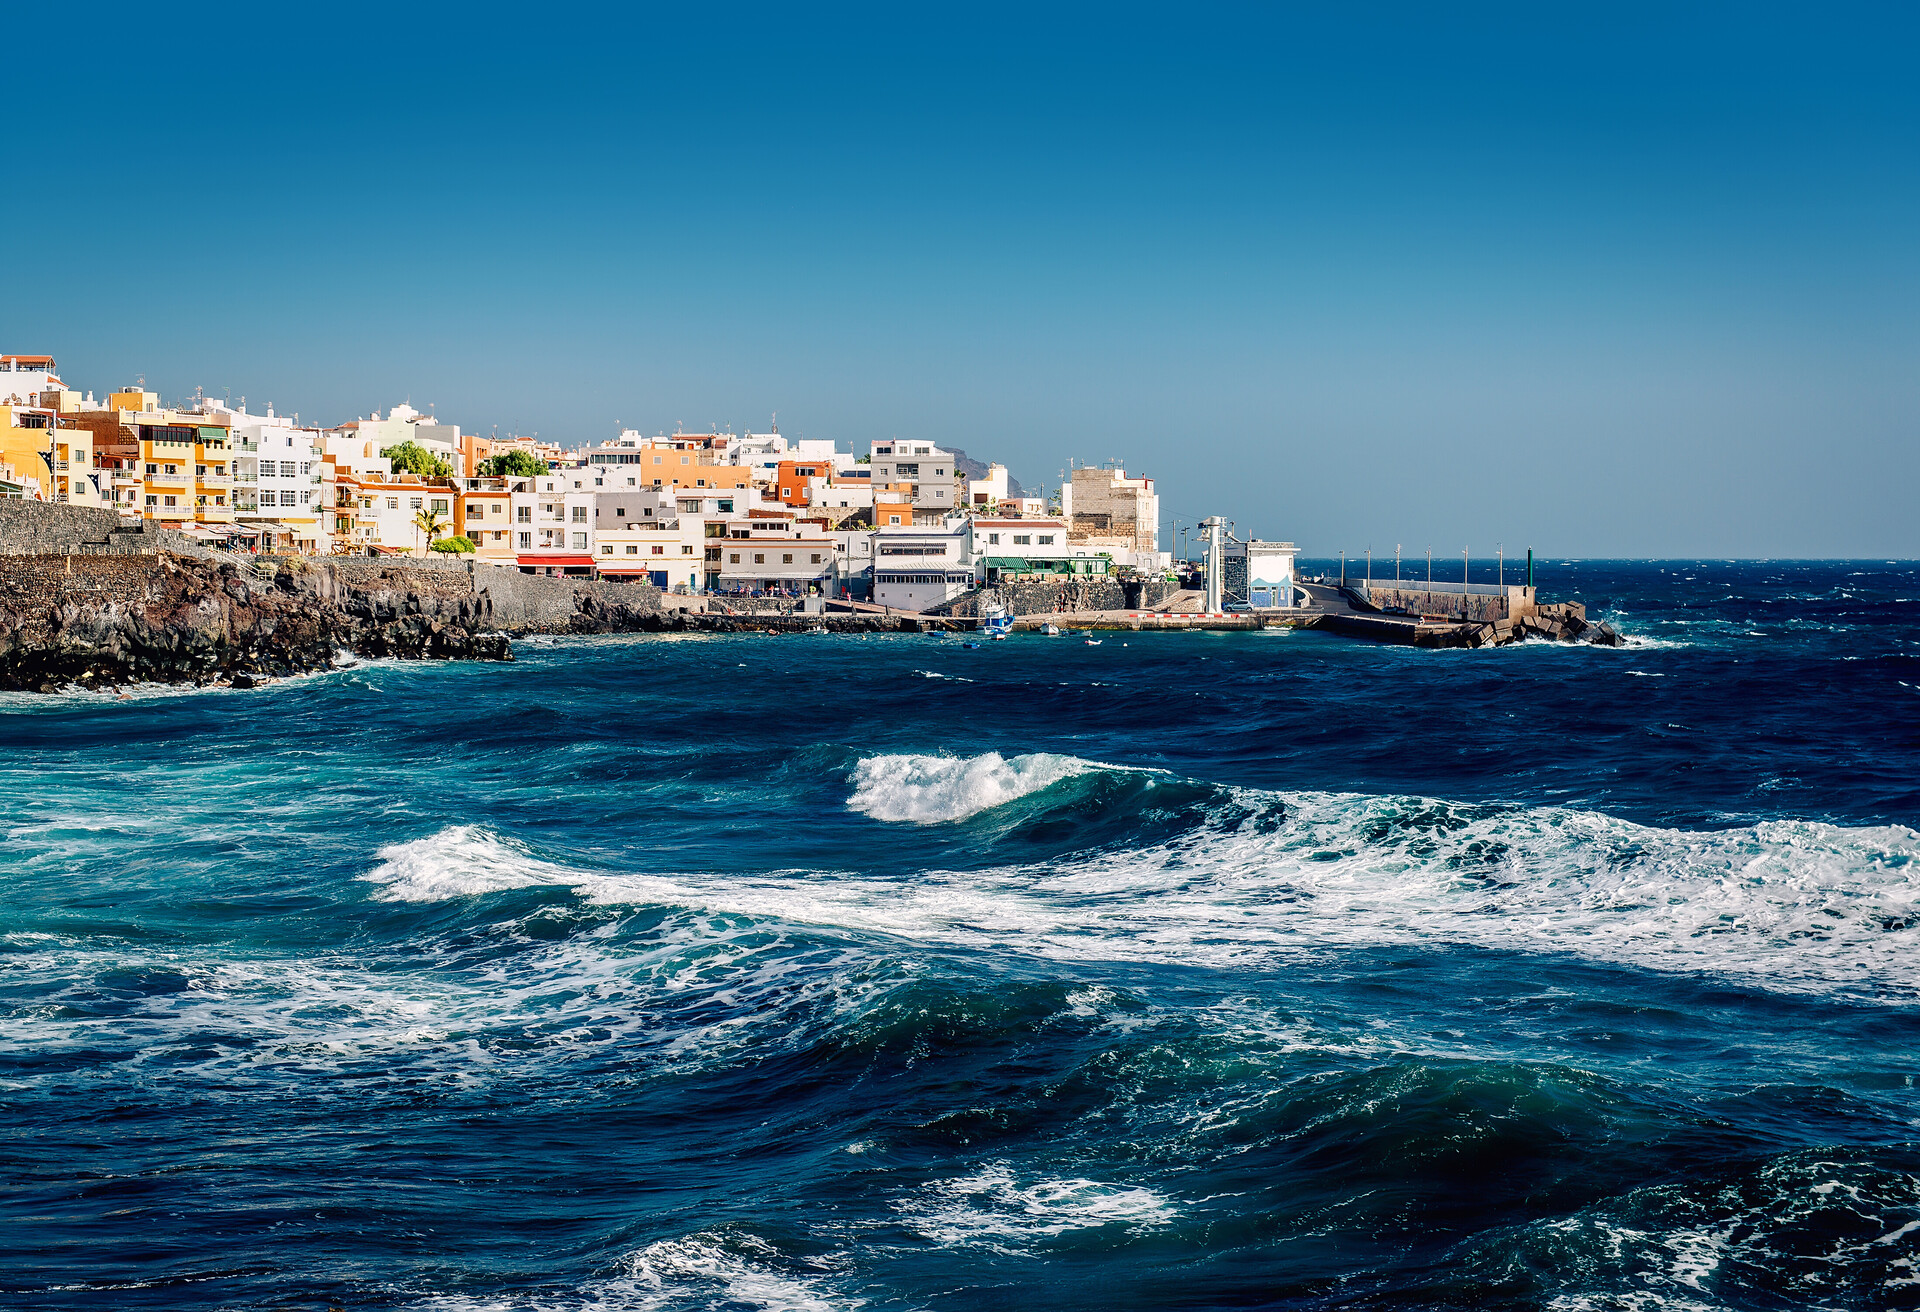 Los Abrigos, small fishing village in Granadilla de Abona, Tenerife. Canary Islands, Spain; Shutterstock ID 318380600